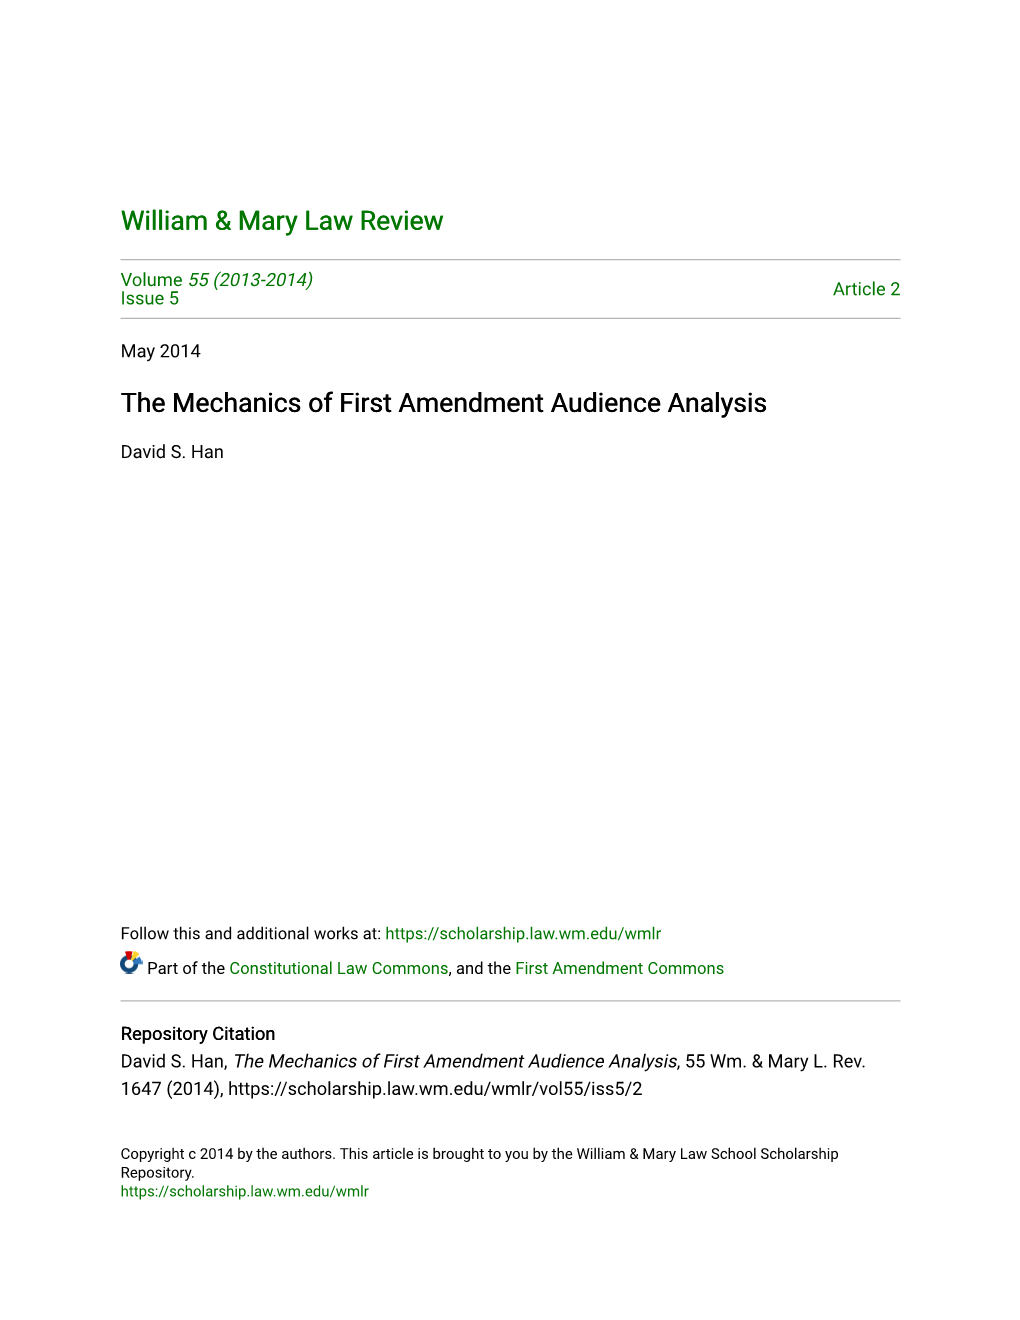 The Mechanics of First Amendment Audience Analysis